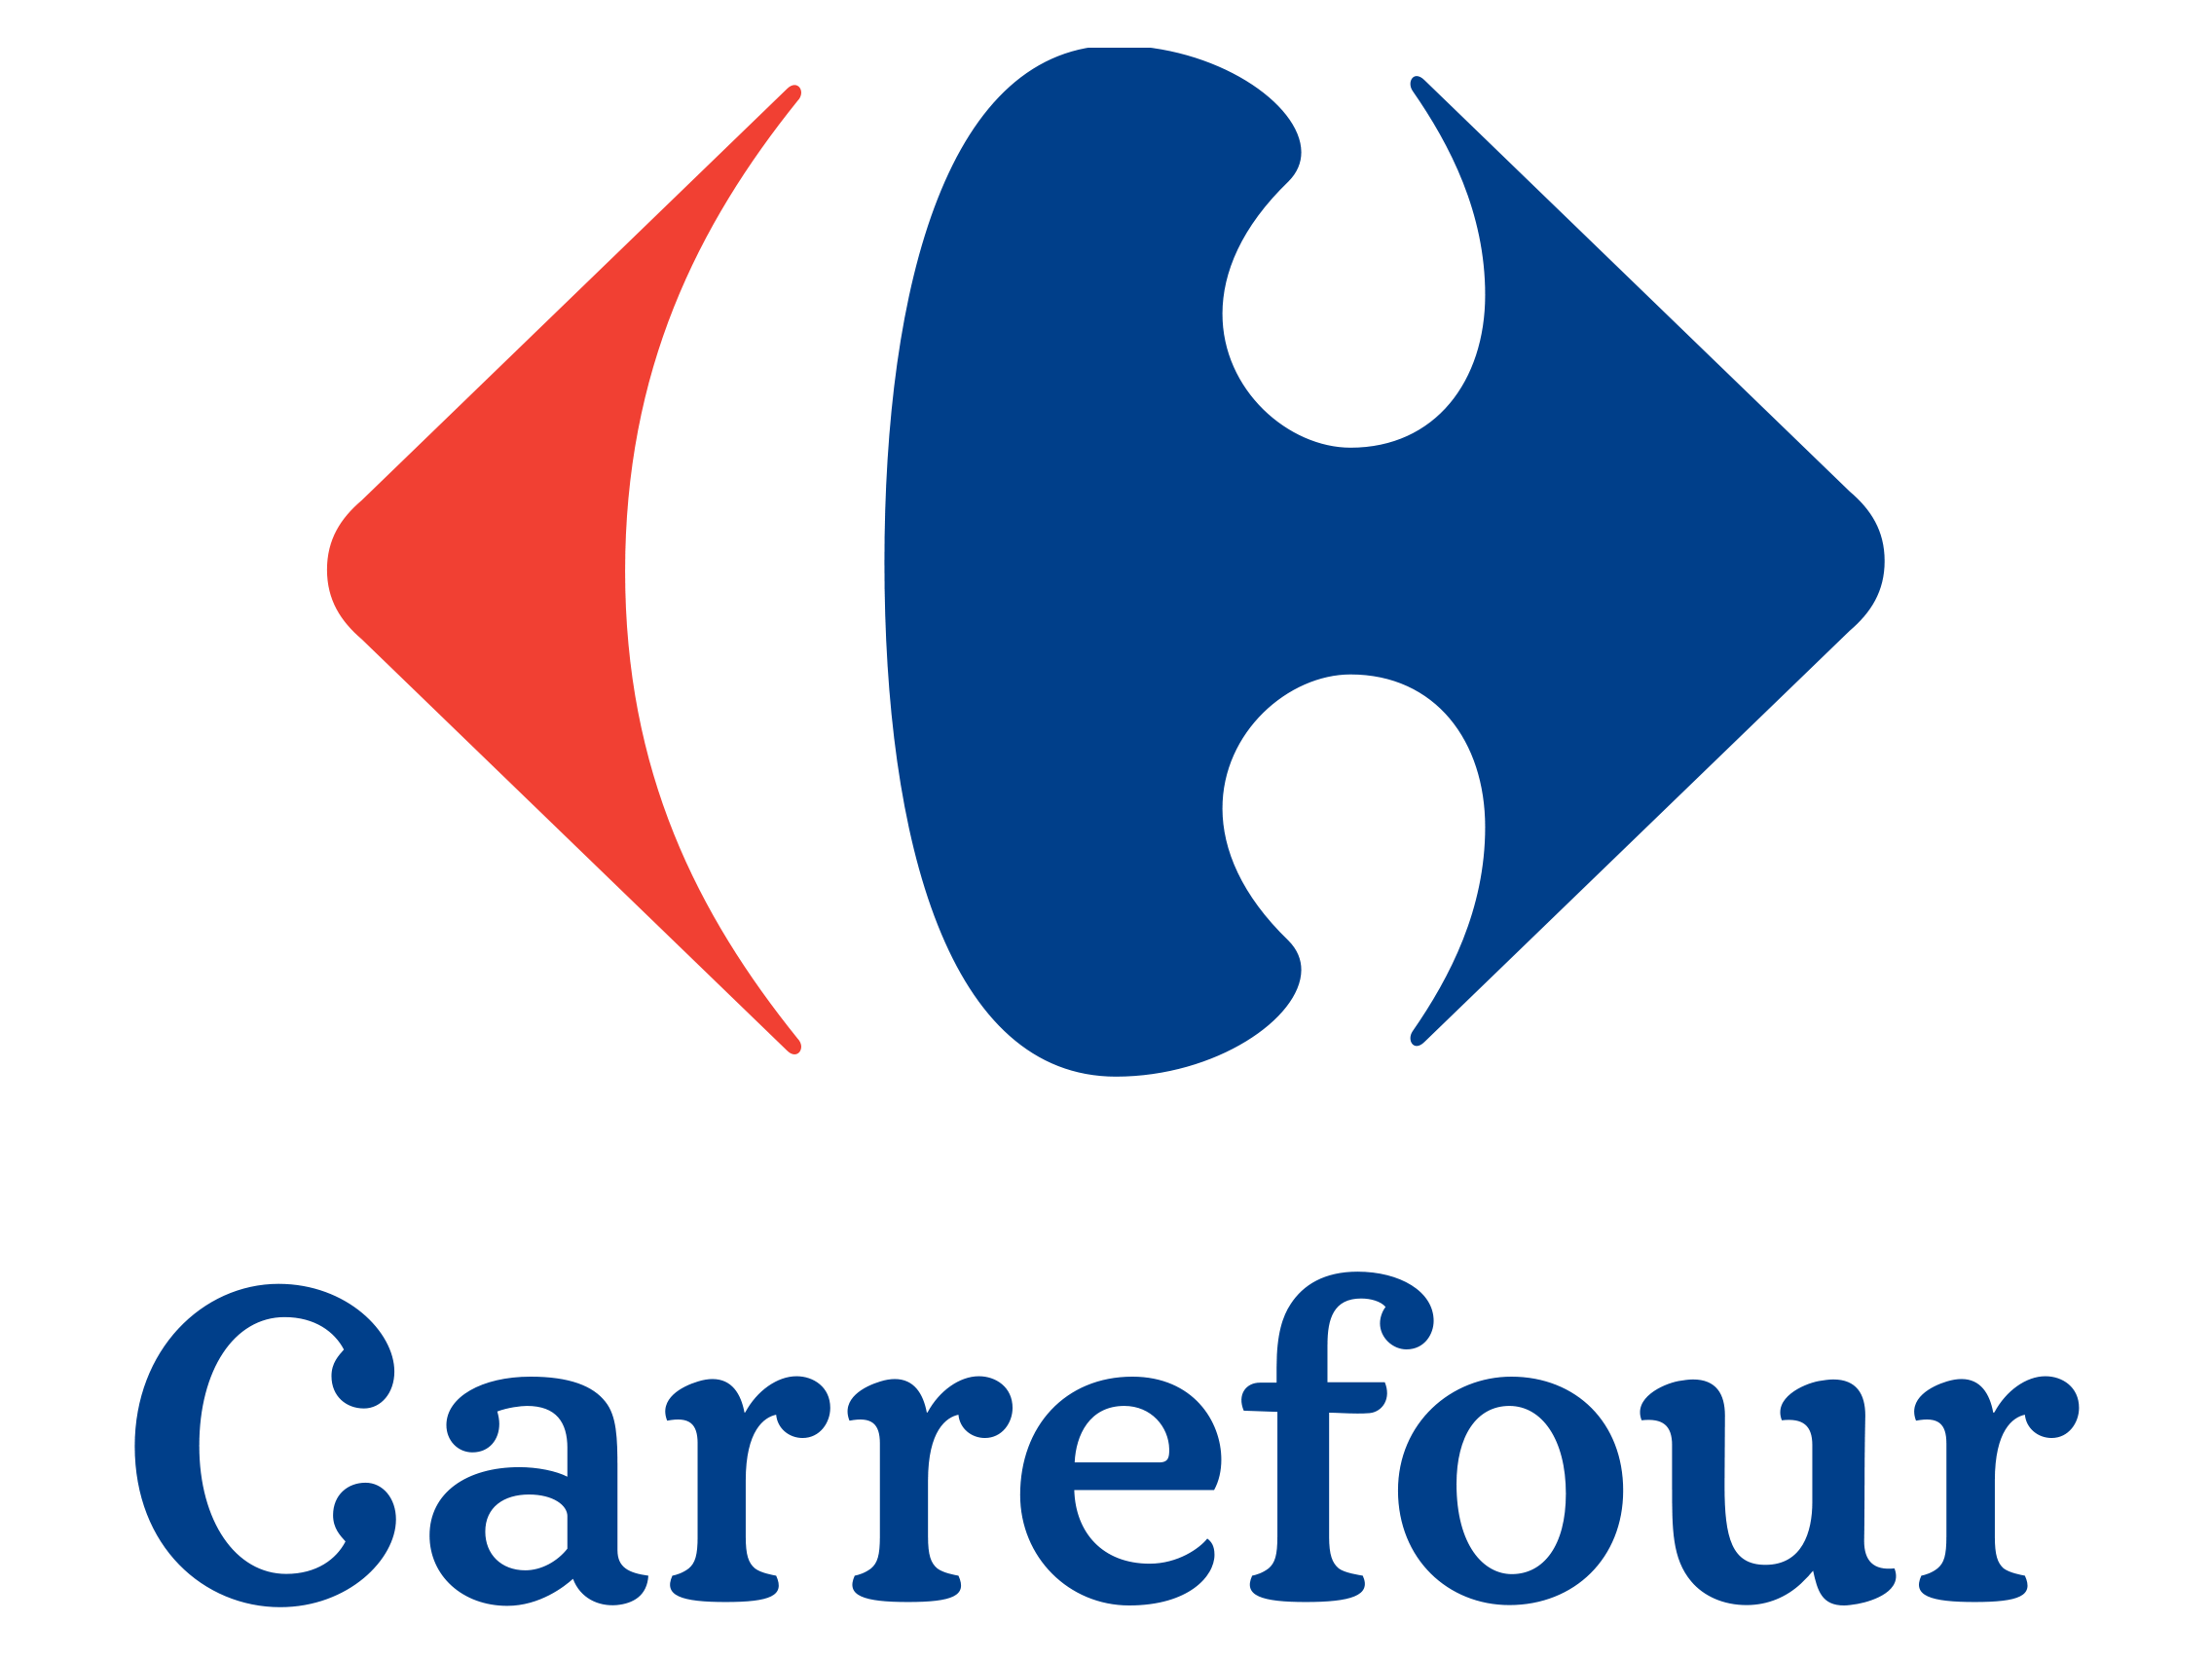 Carrefoursa Brand Logo